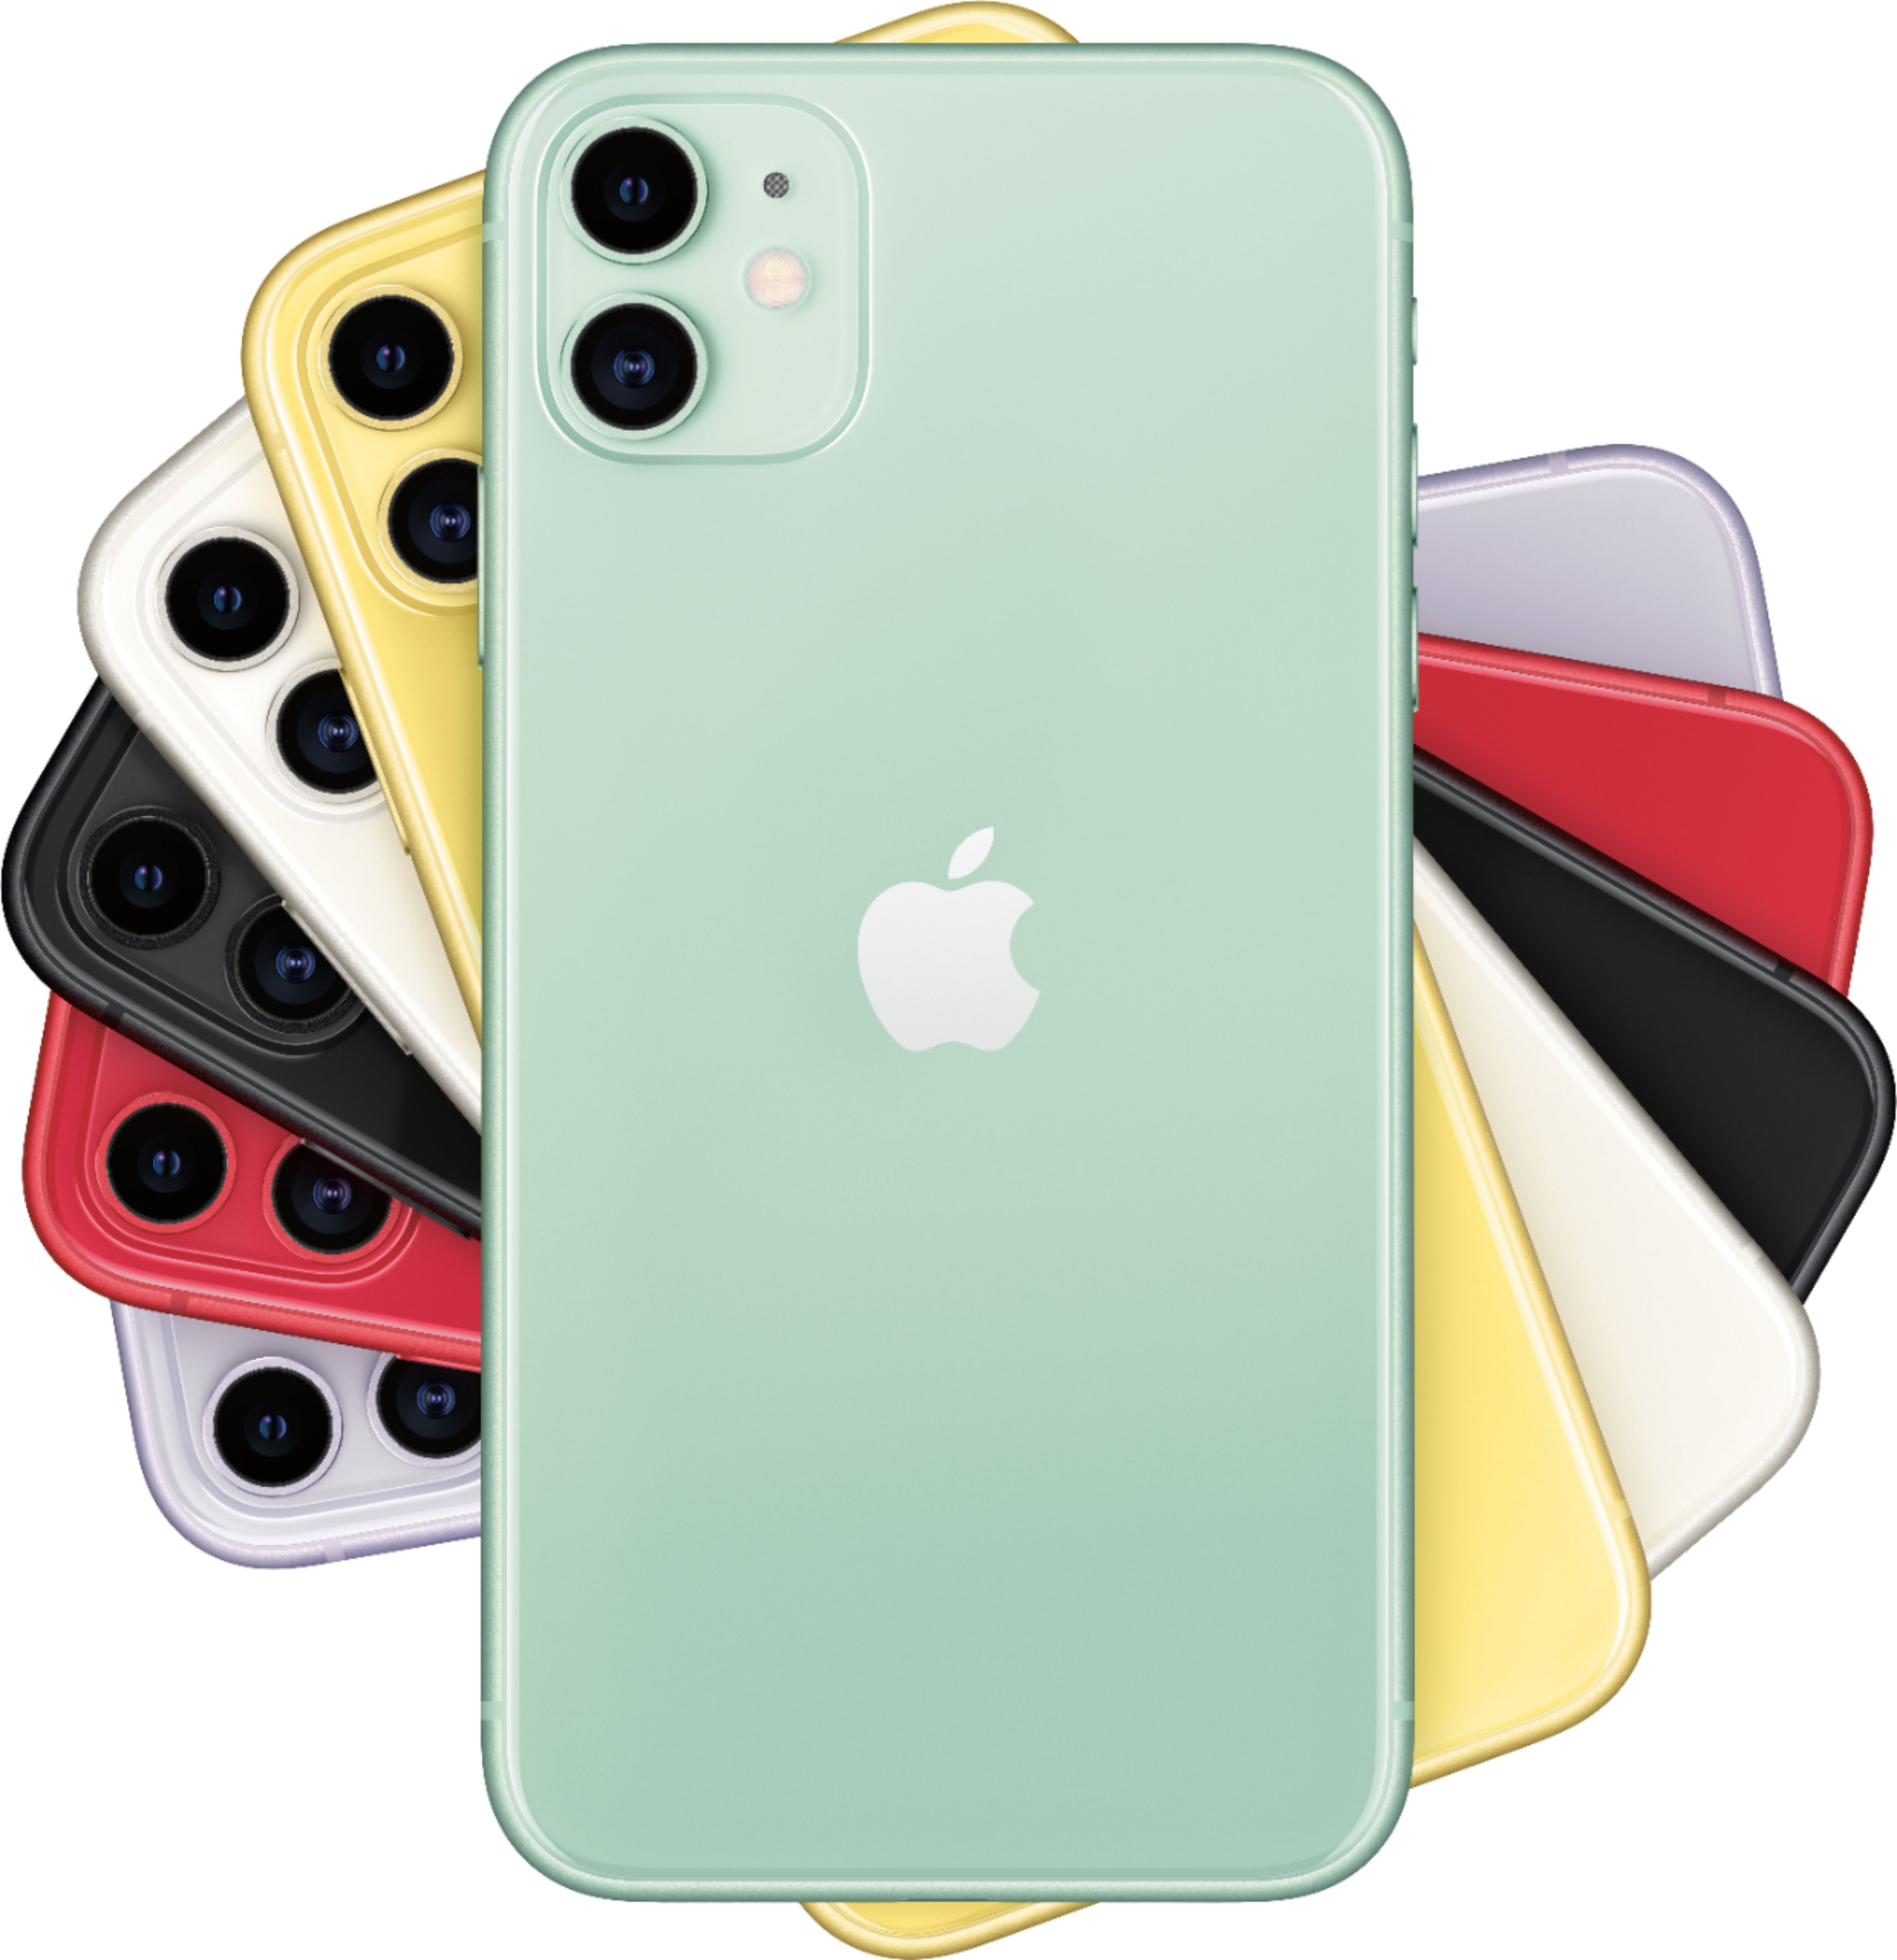 Apple iPhone 11 256GB Green (Unlocked) MWL62LL/A - Best Buy